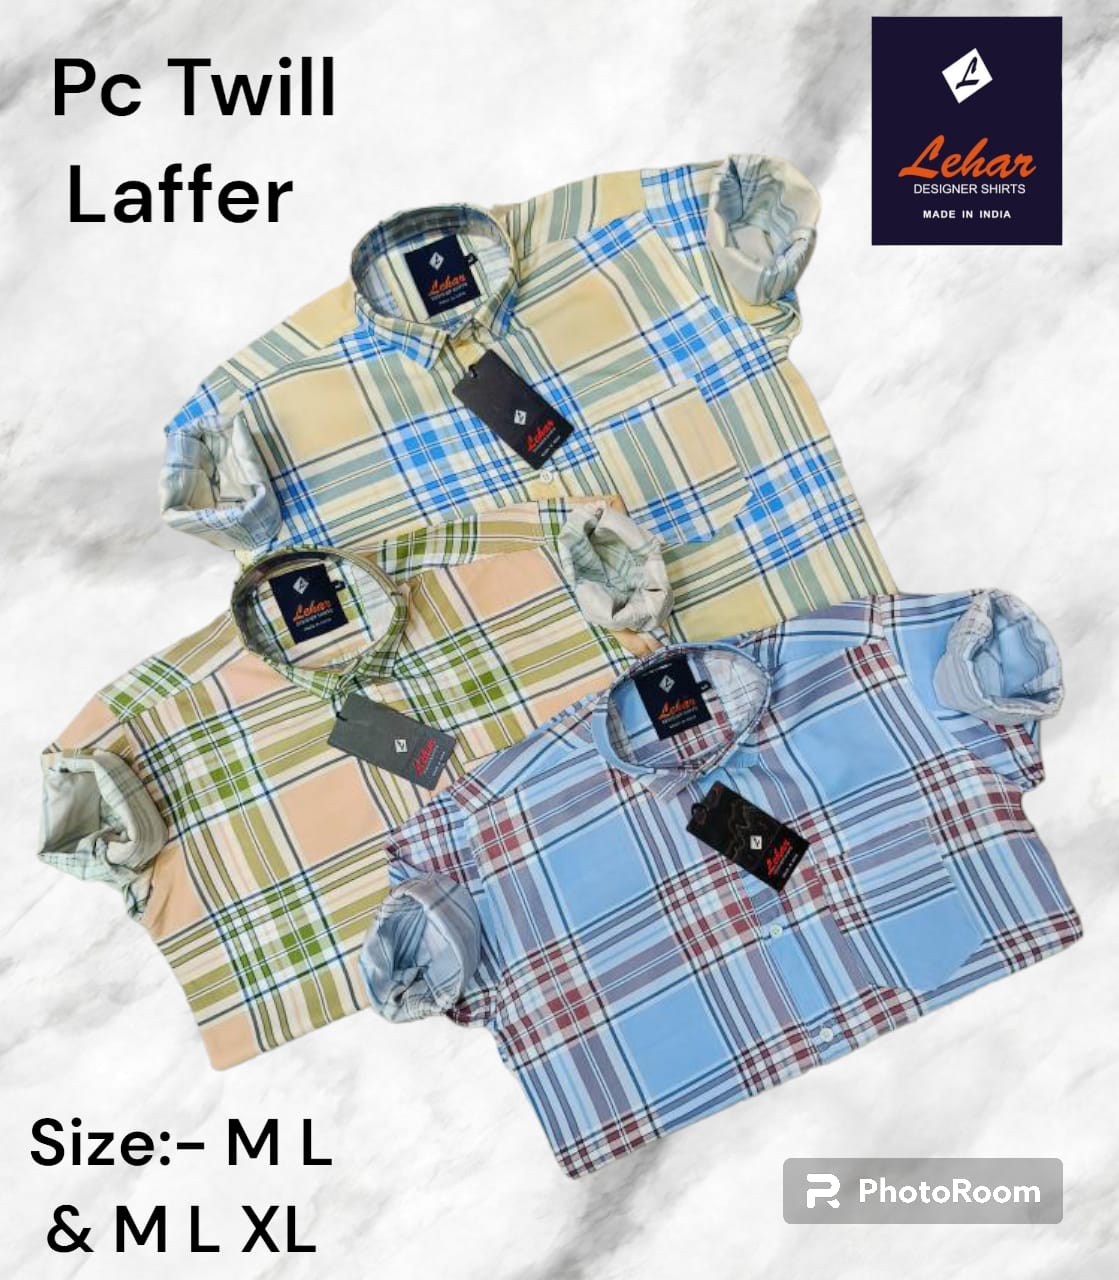 Design 9 Lehar Mens Shirts